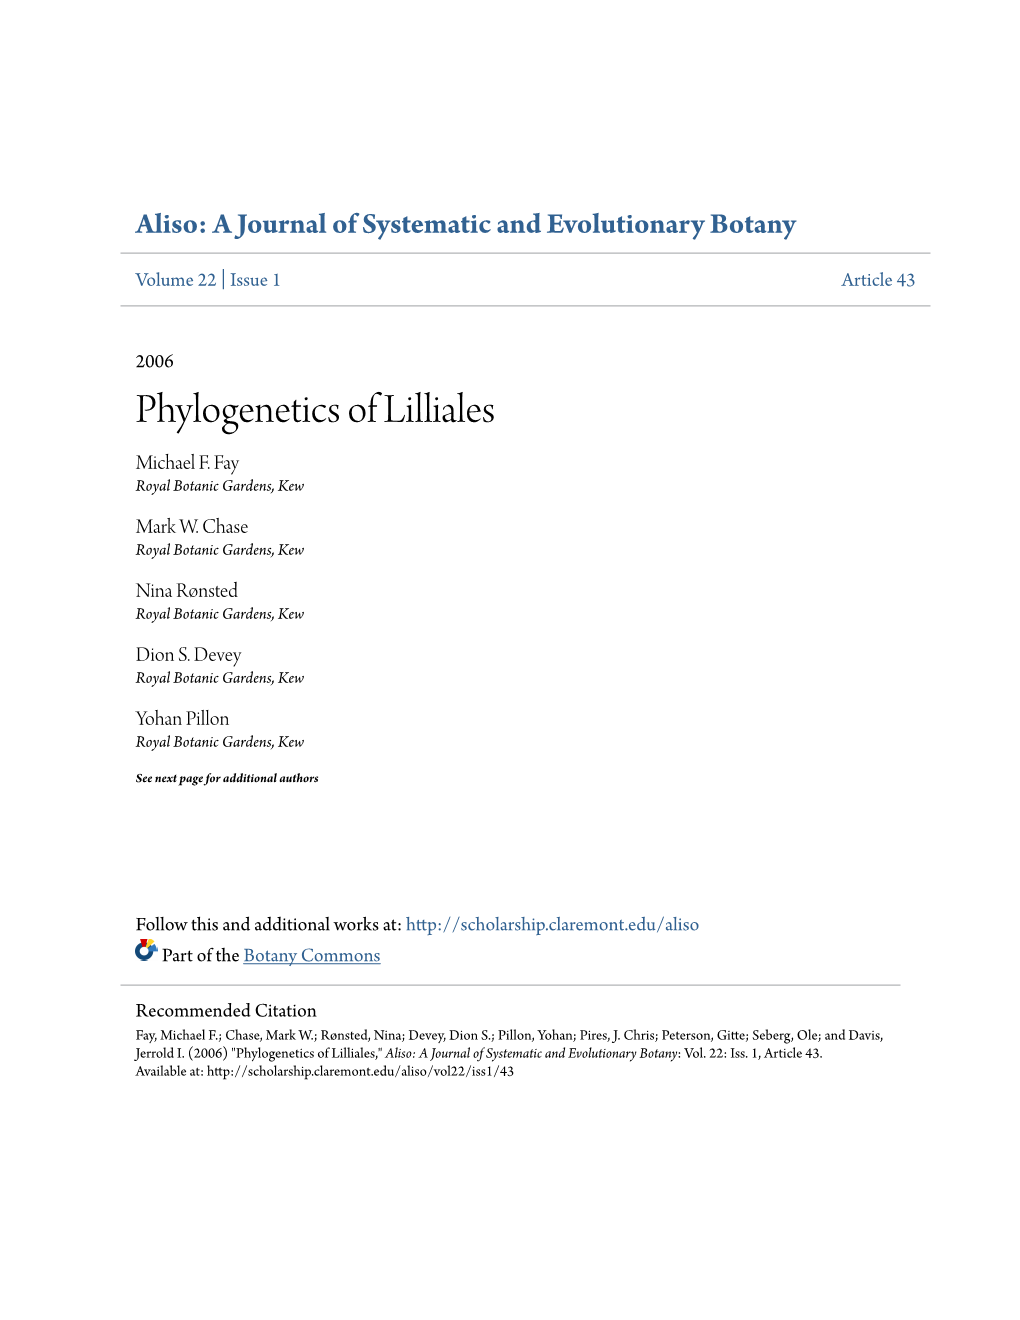 Phylogenetics of Lilliales Michael F